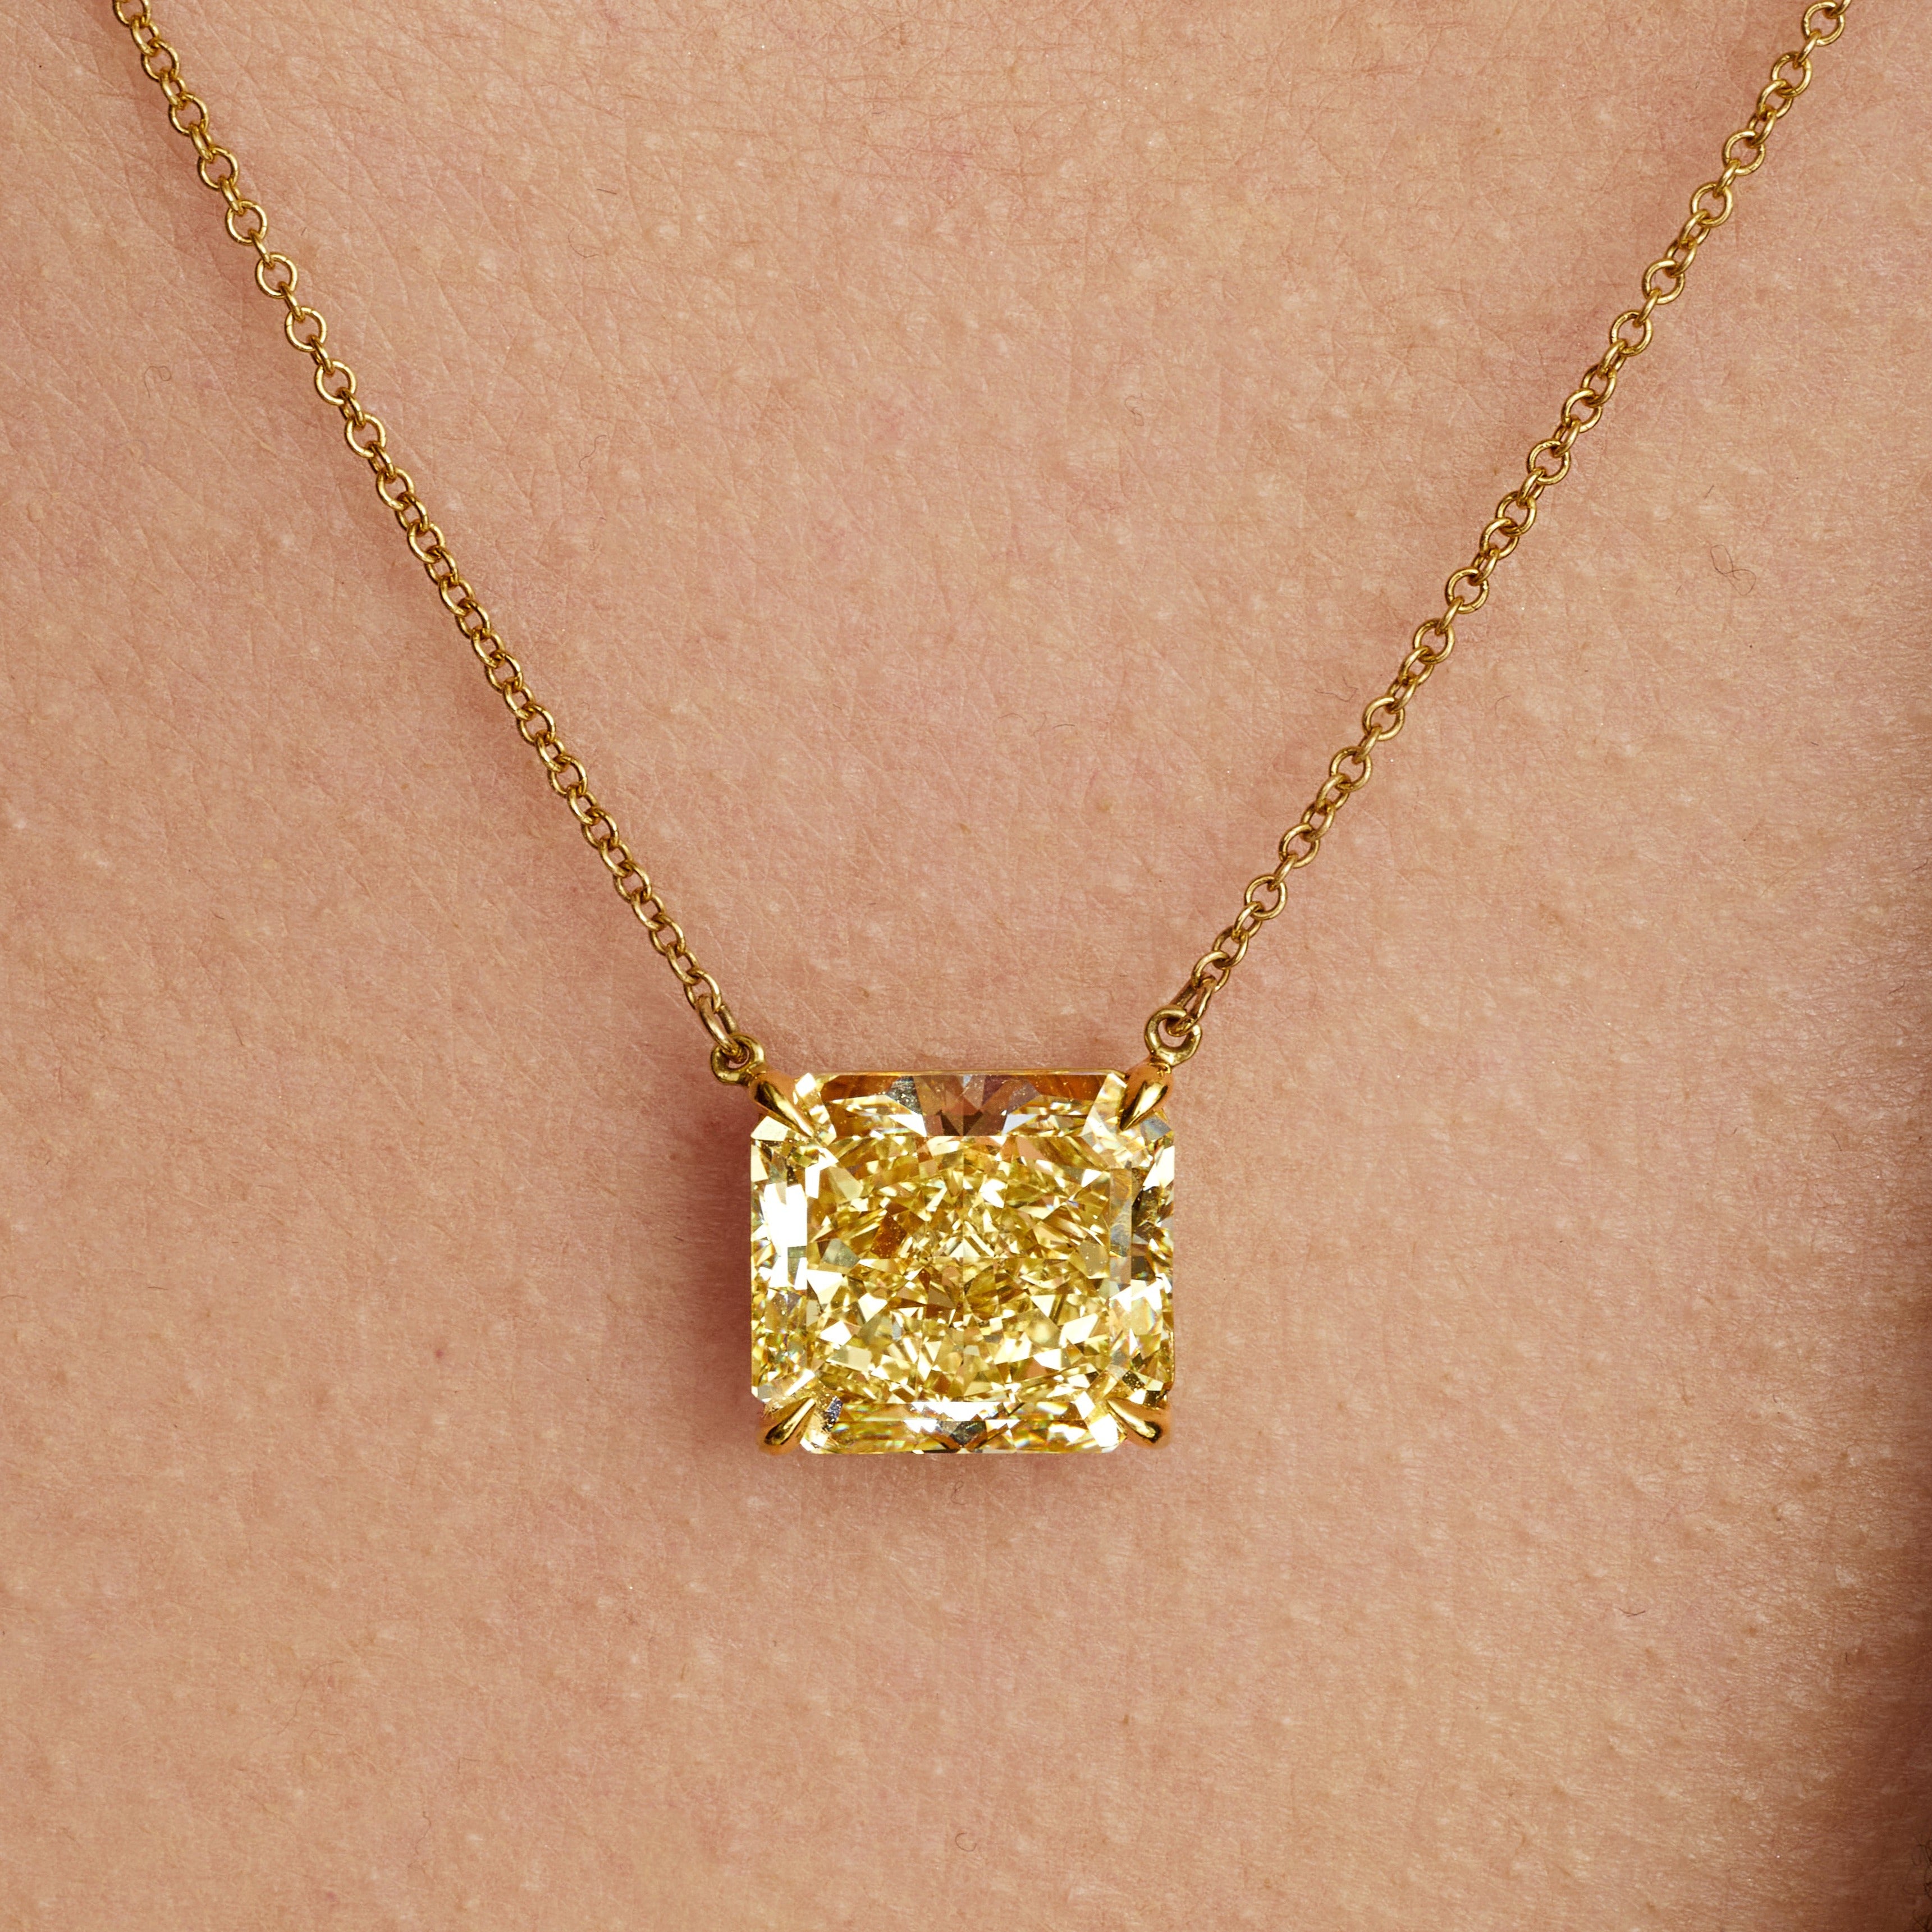 Radiant Cut Fancy Yellow Diamond Necklace in 18 Karat Yellow Gold